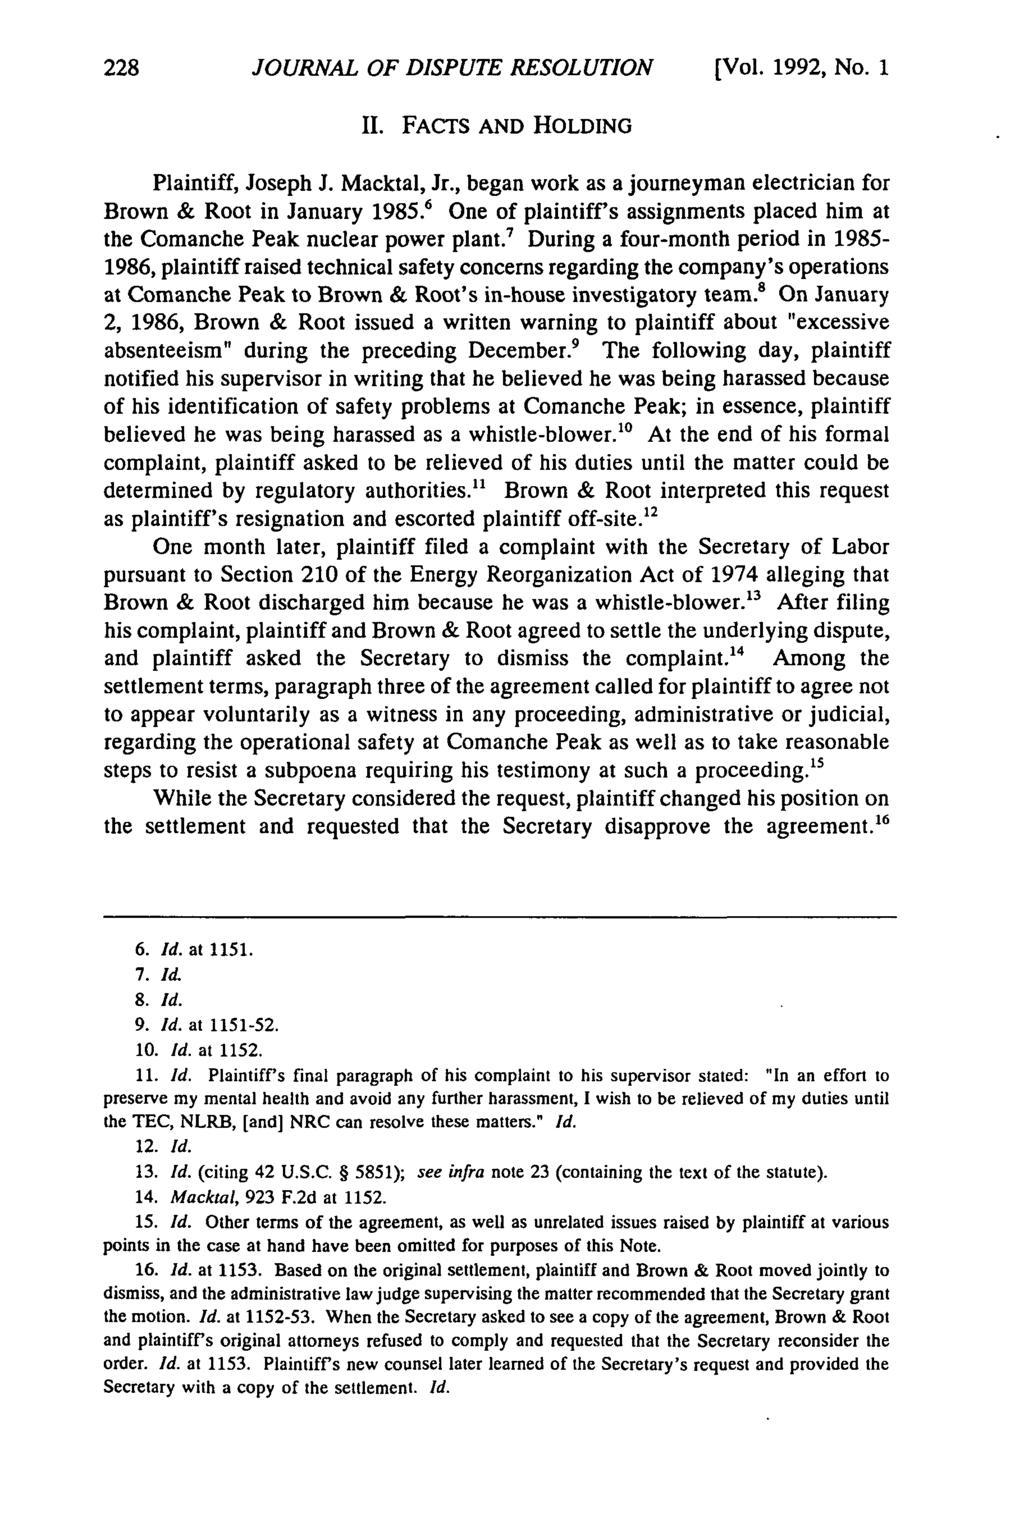 JOURNAL Journal of Dispute OF DISPUTE Resolution, Vol. RESOLUTION 1992, Iss. 1 [1992], Art. [Vol. 13 1992, No. 1 II. FACTS AND HOLDING Plaintiff, Joseph J. Macktal, Jr.